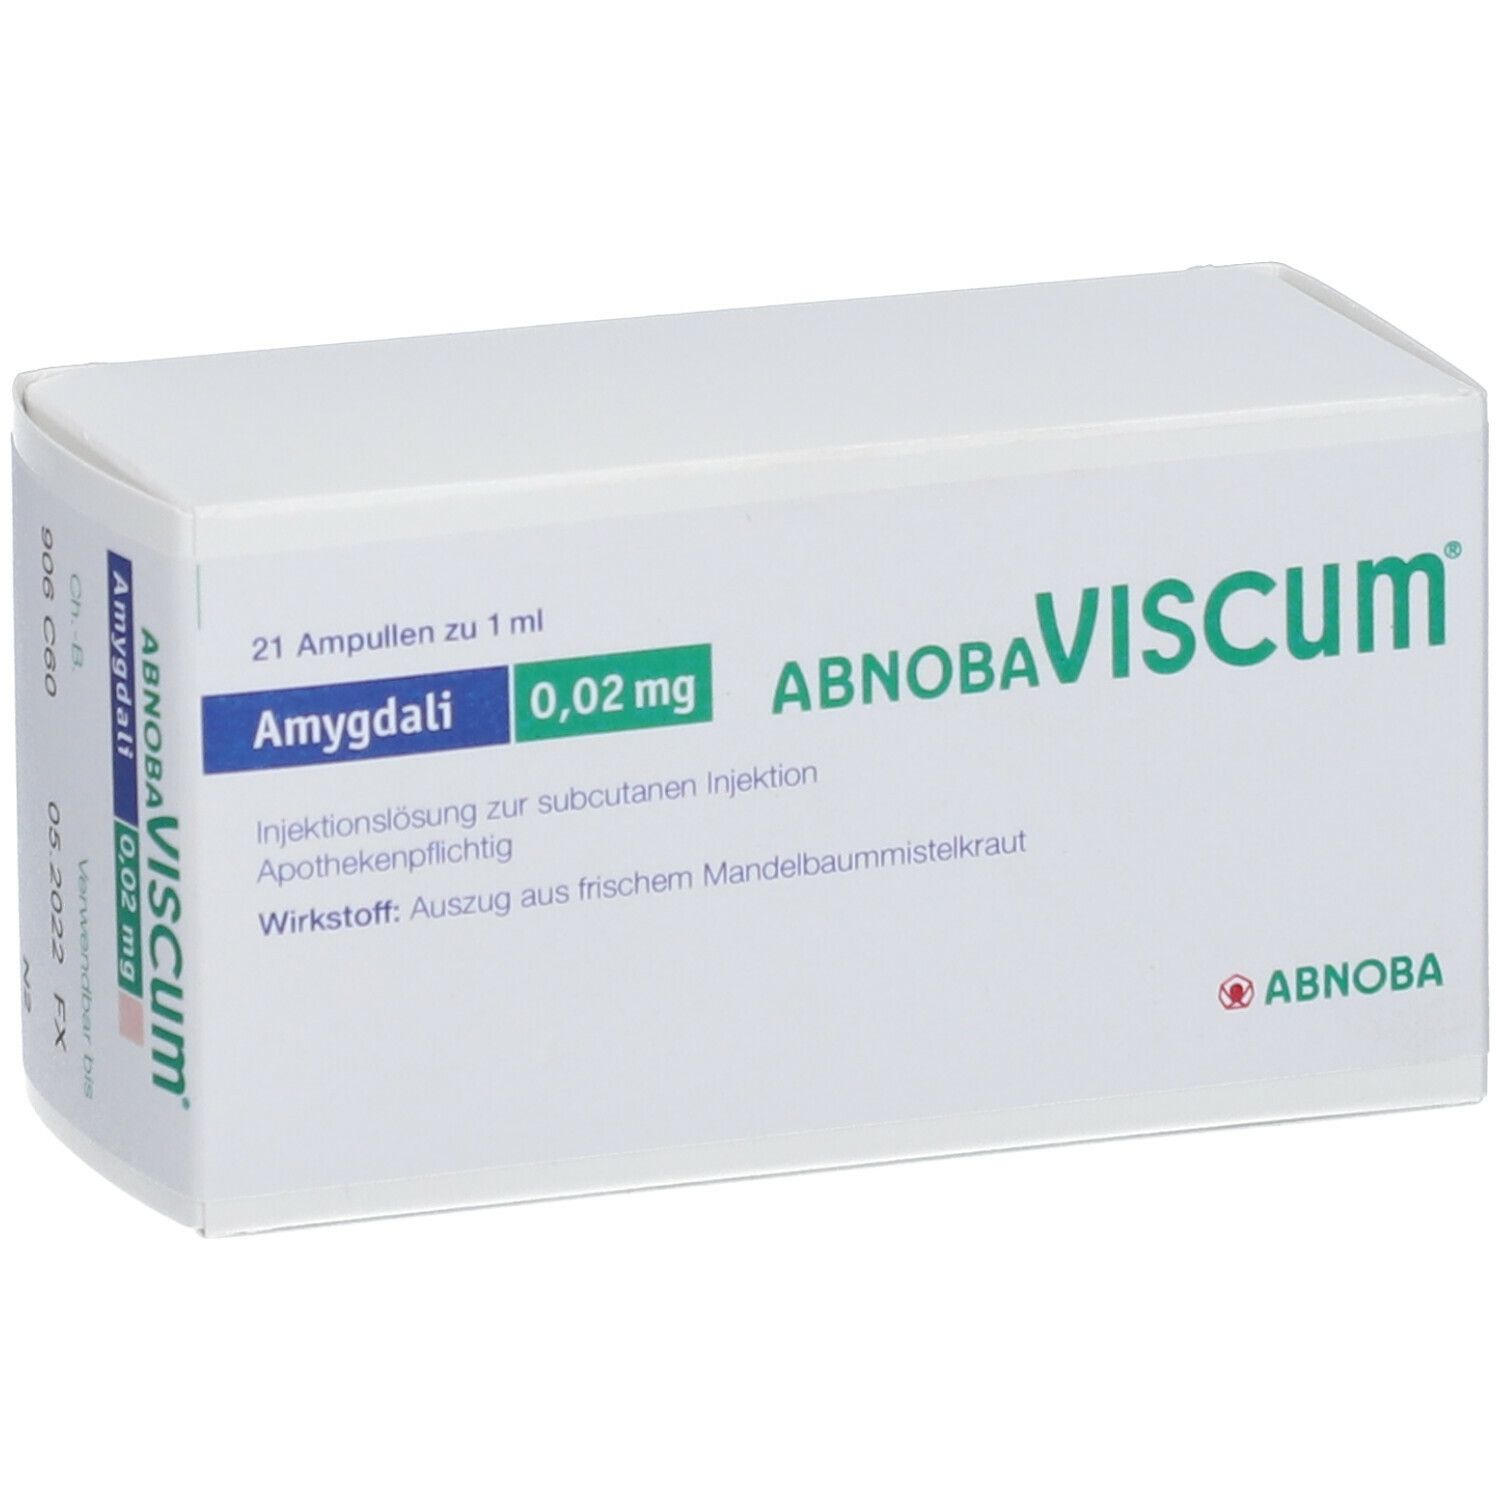 abnobaVISCUM® Amygdali 0,02 mg Ampullen